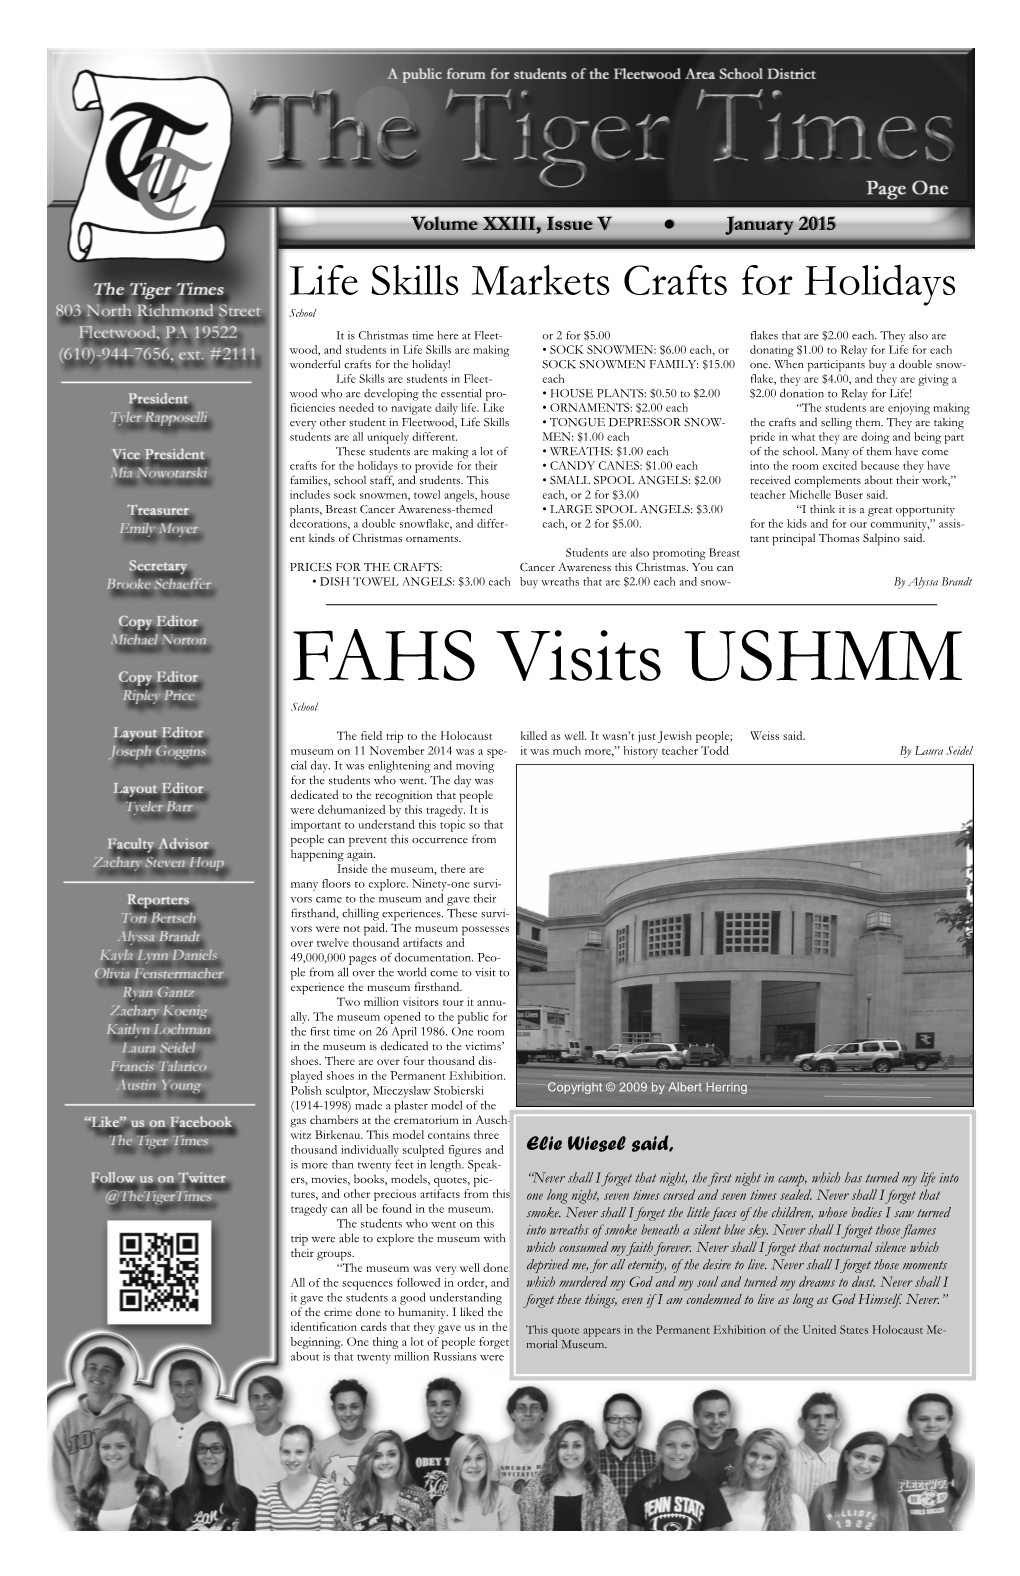 FAHS Visits USHMM School